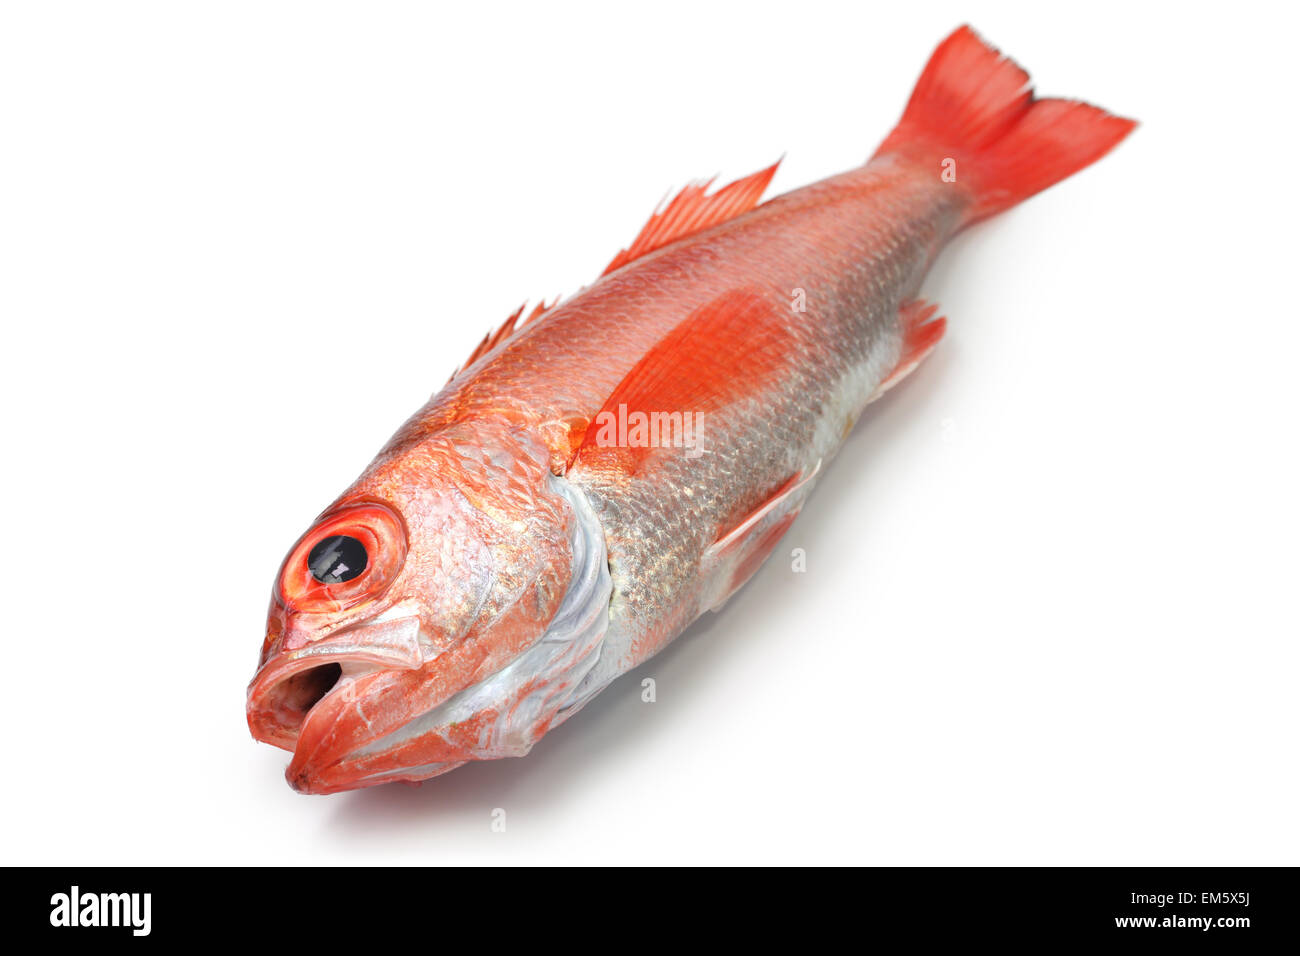 Blackthroat seaperch, rosy spigola, nodoguro, akamutsu, giapponese di alta  classe pesce Foto stock - Alamy